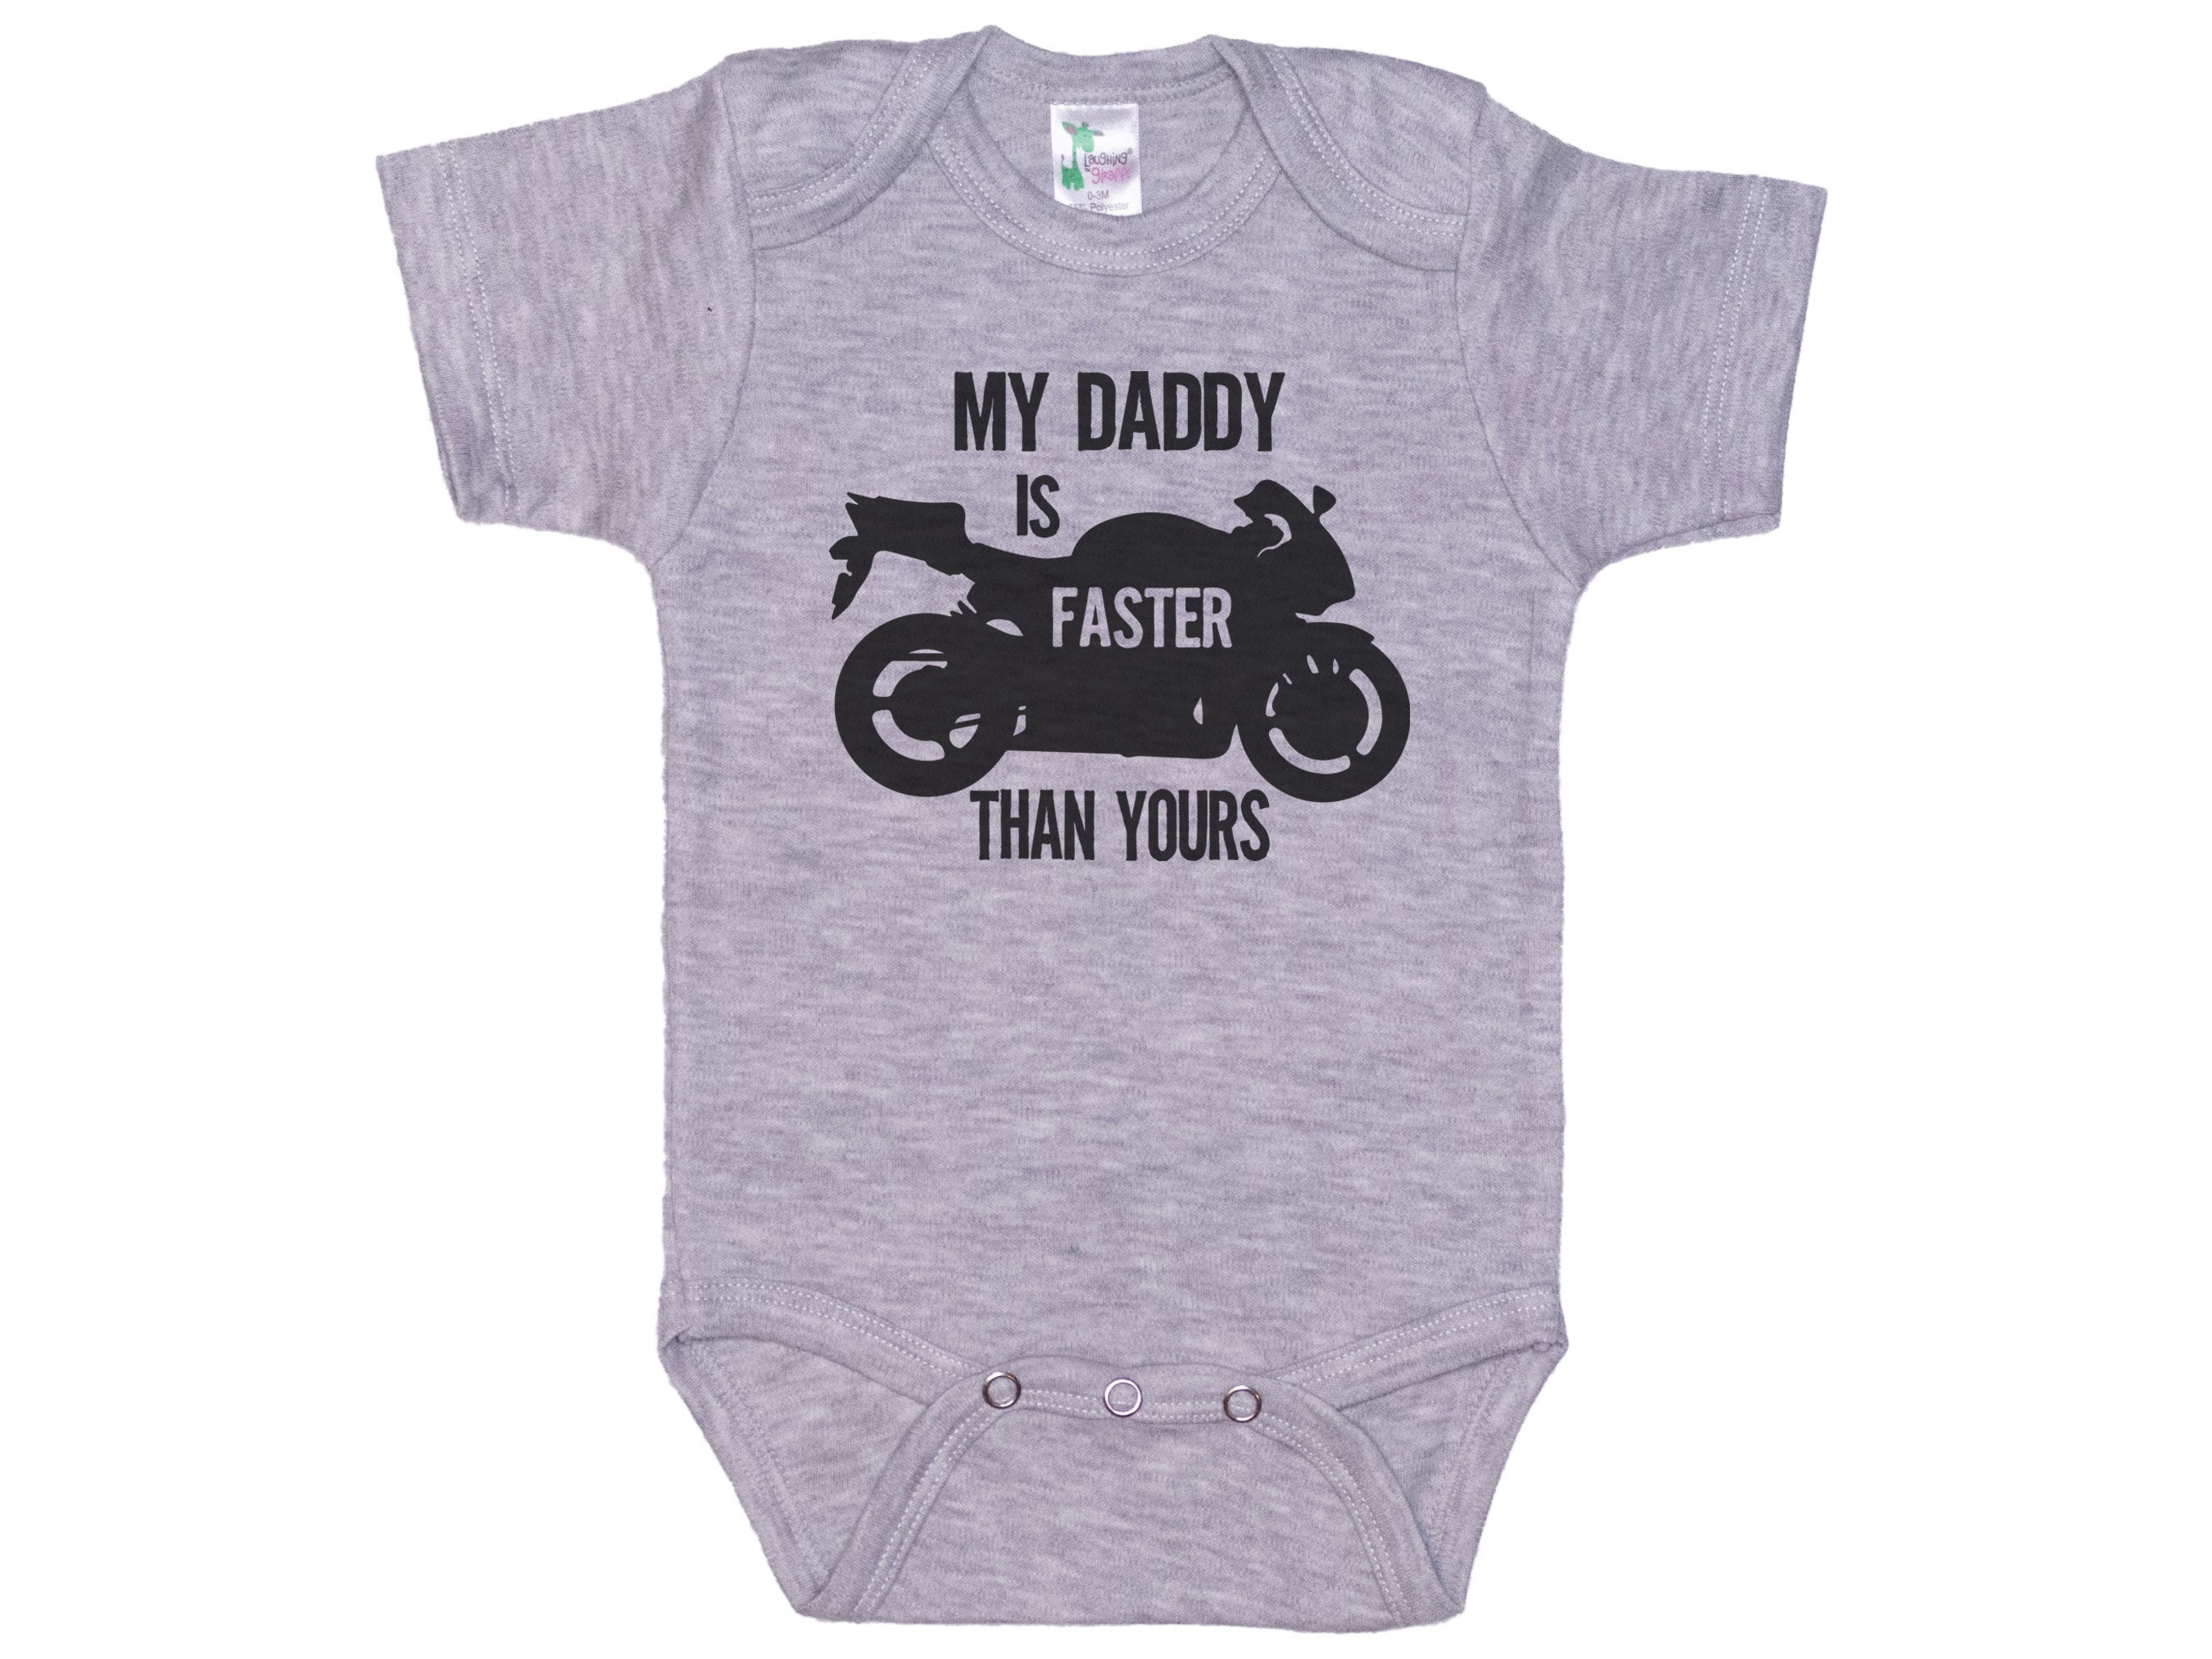 Bodysuit for biker or biker baby-born to be a biker-biker-gift for biker  babies. Short Sleeve Long Sleeve Original Designs Baby Suit